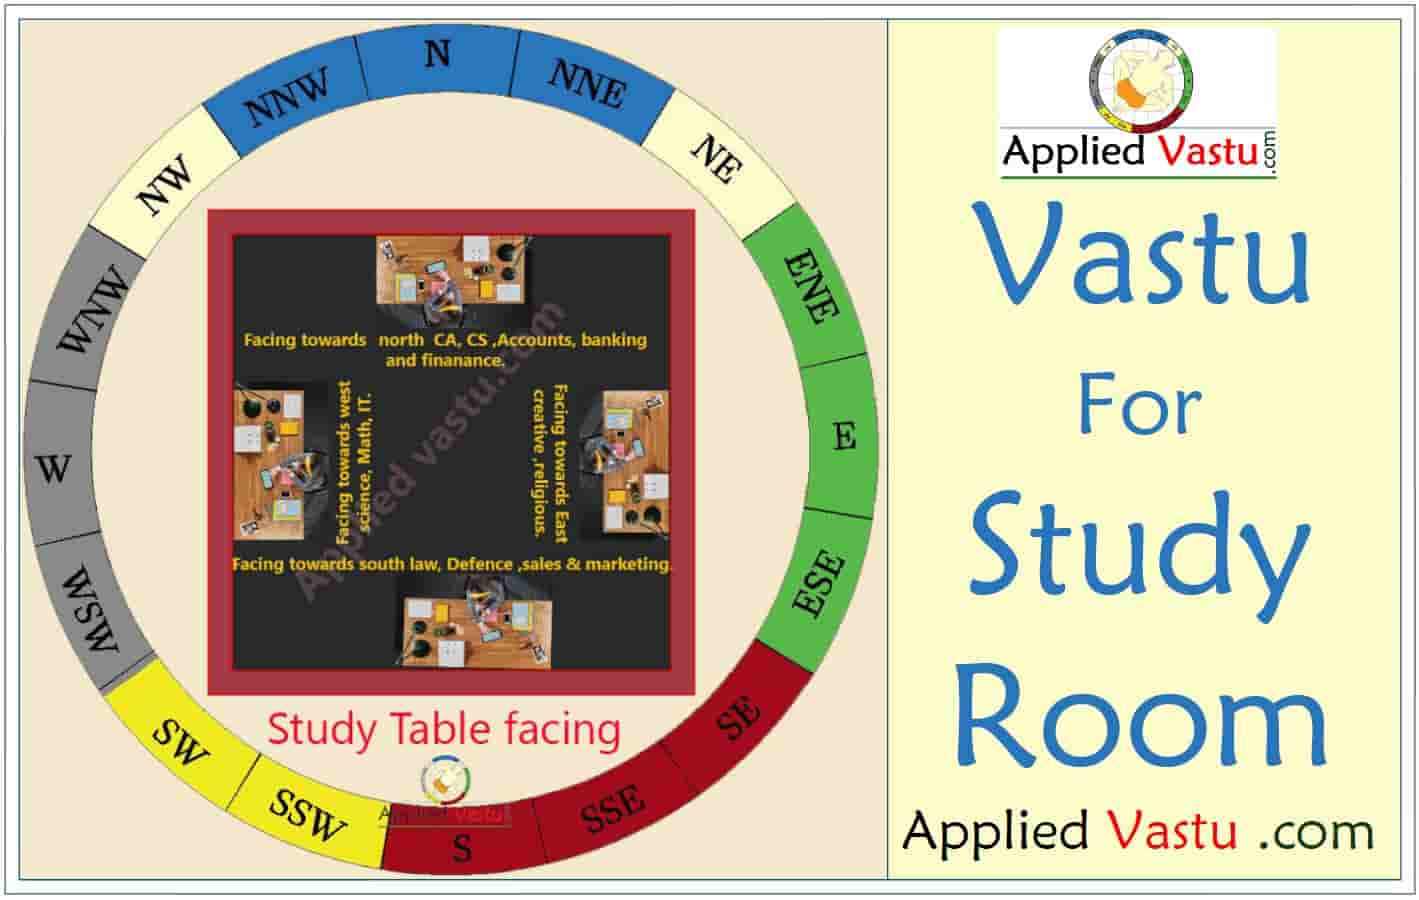 Vastu For Study Room Important, Study Table In Living Room As Per Vastu